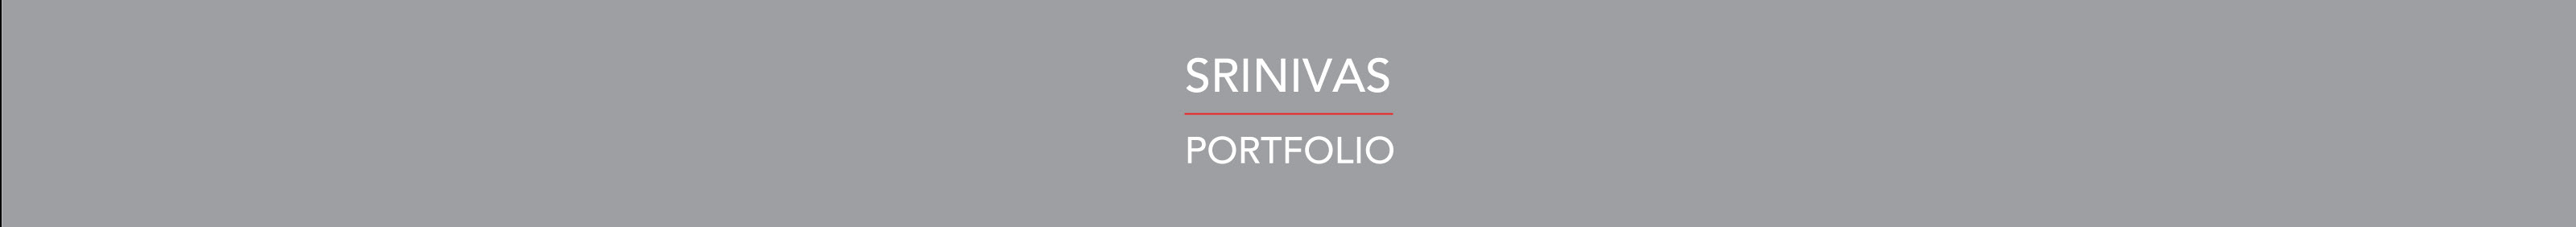 P V Srinivass profilbanner